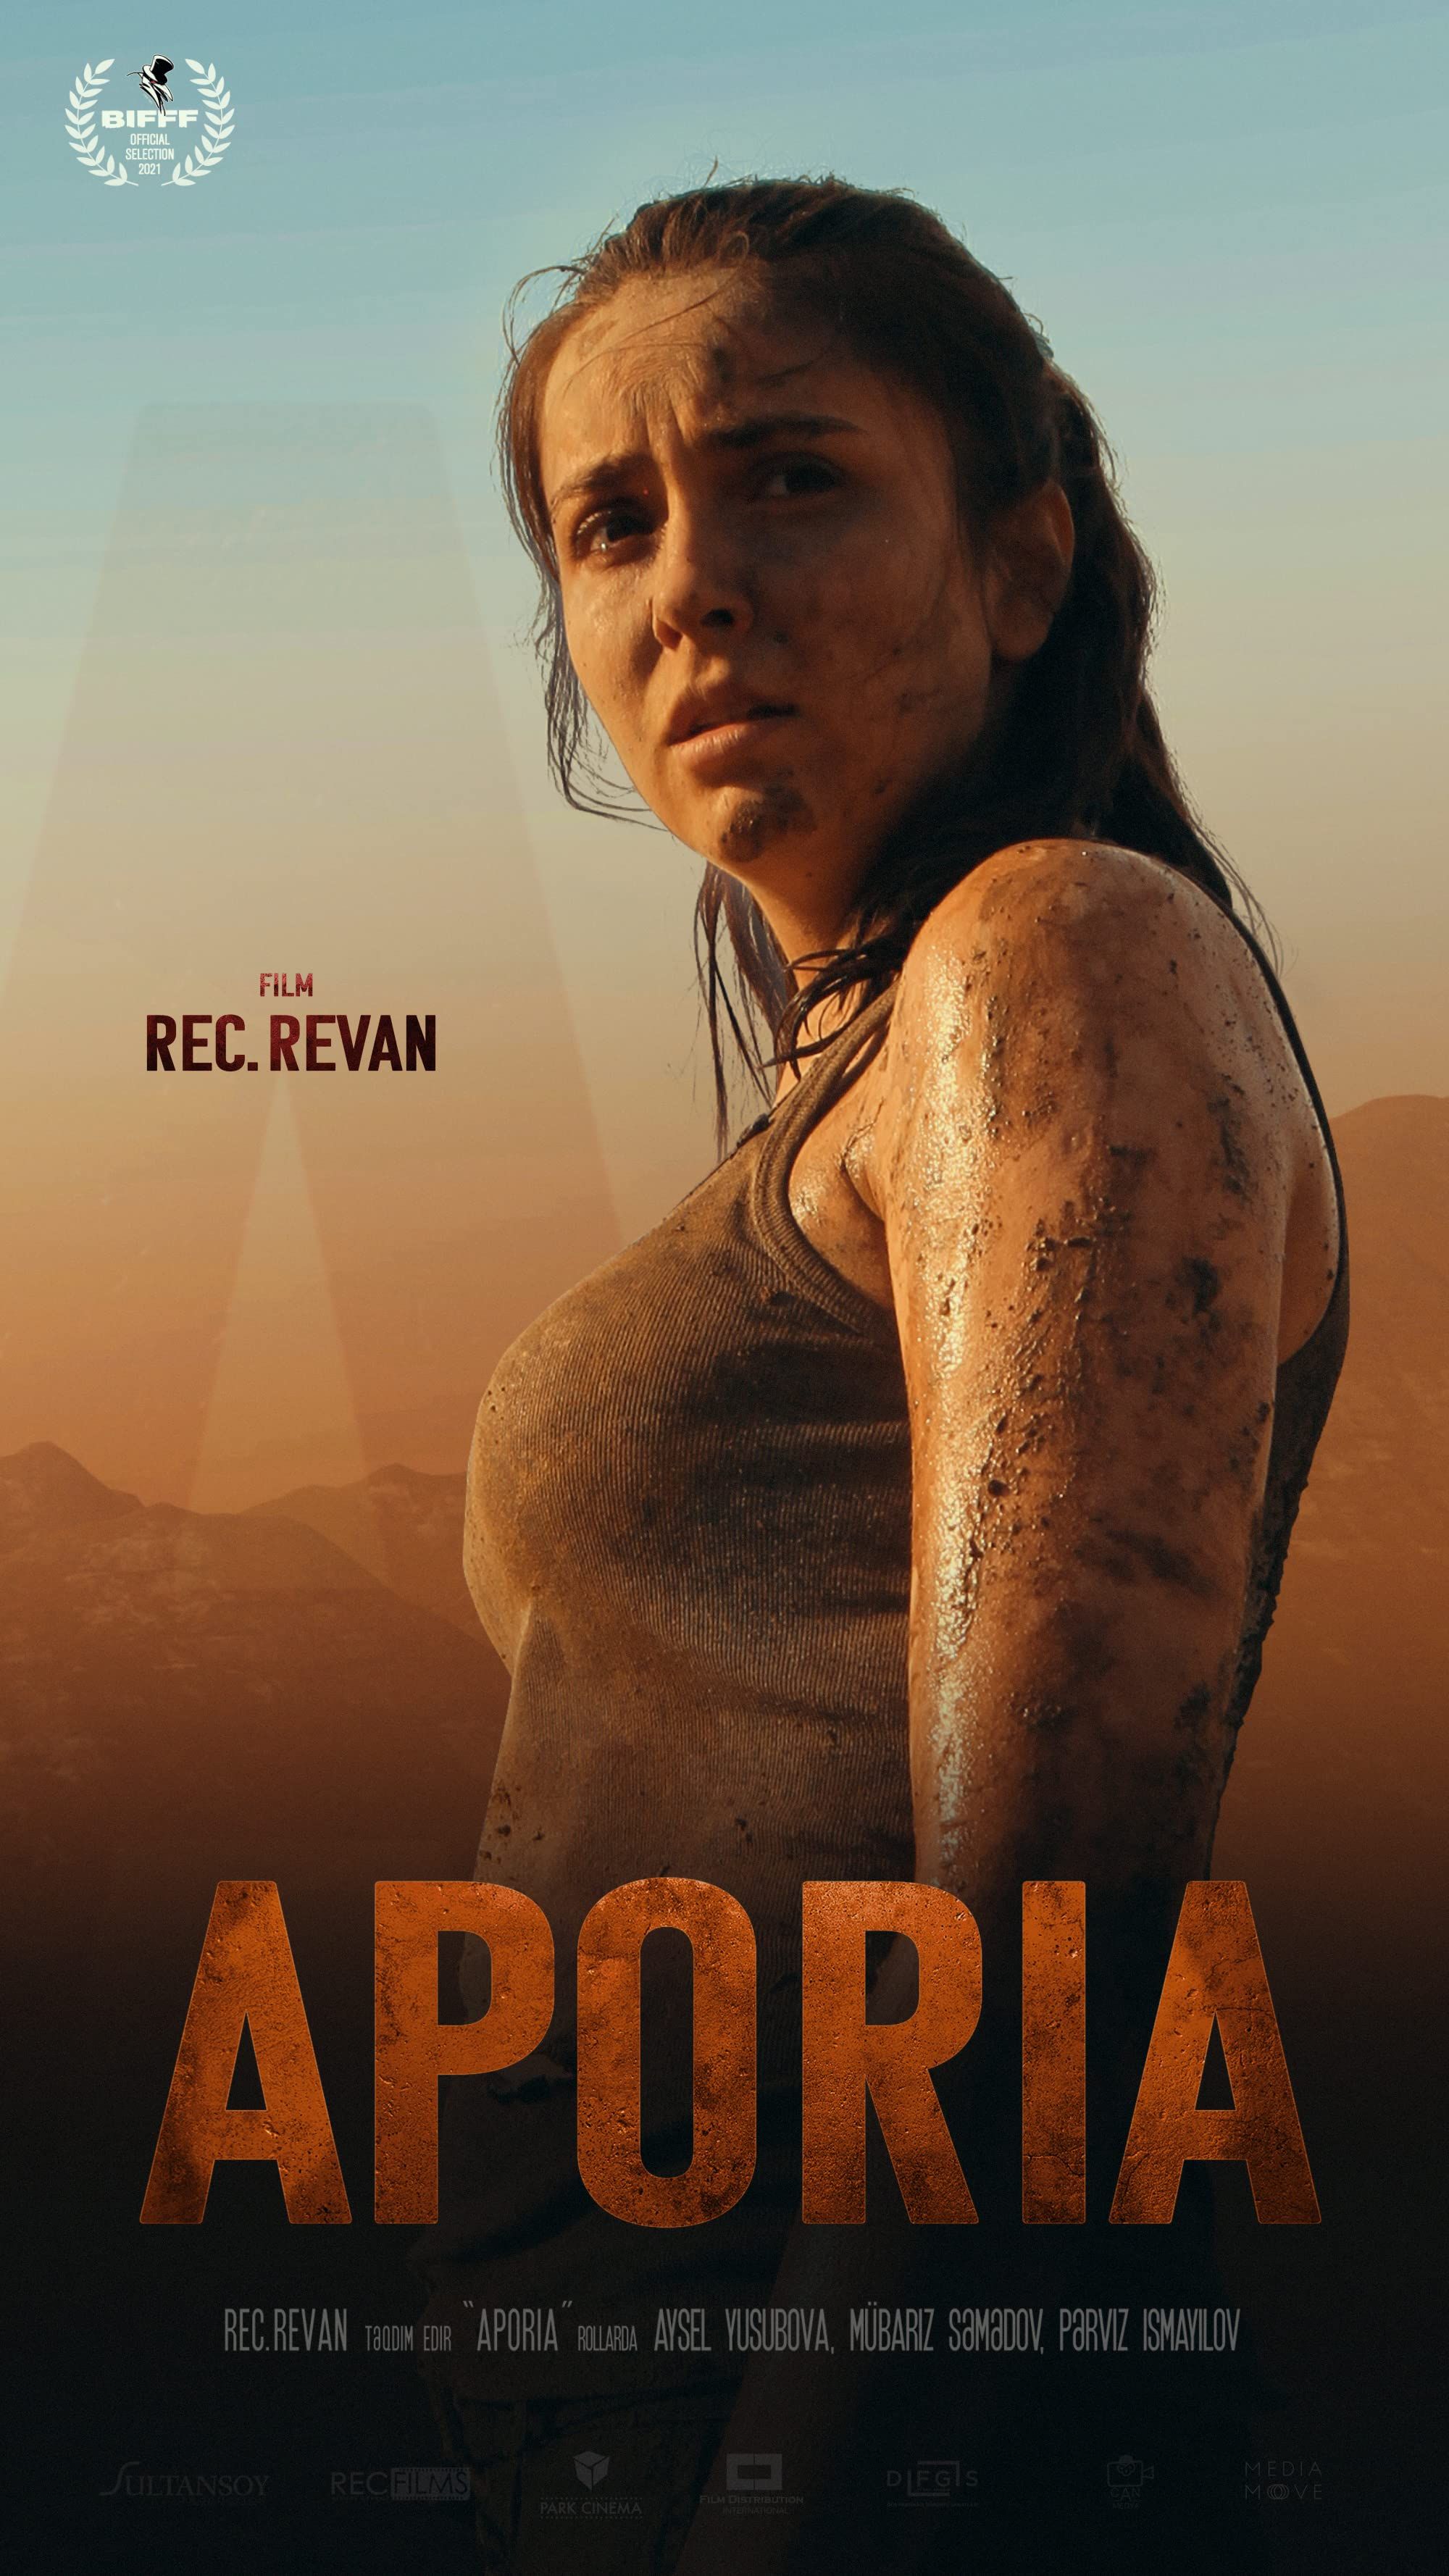 Aporia (2019) Hindi Dubbed HDRip download full movie